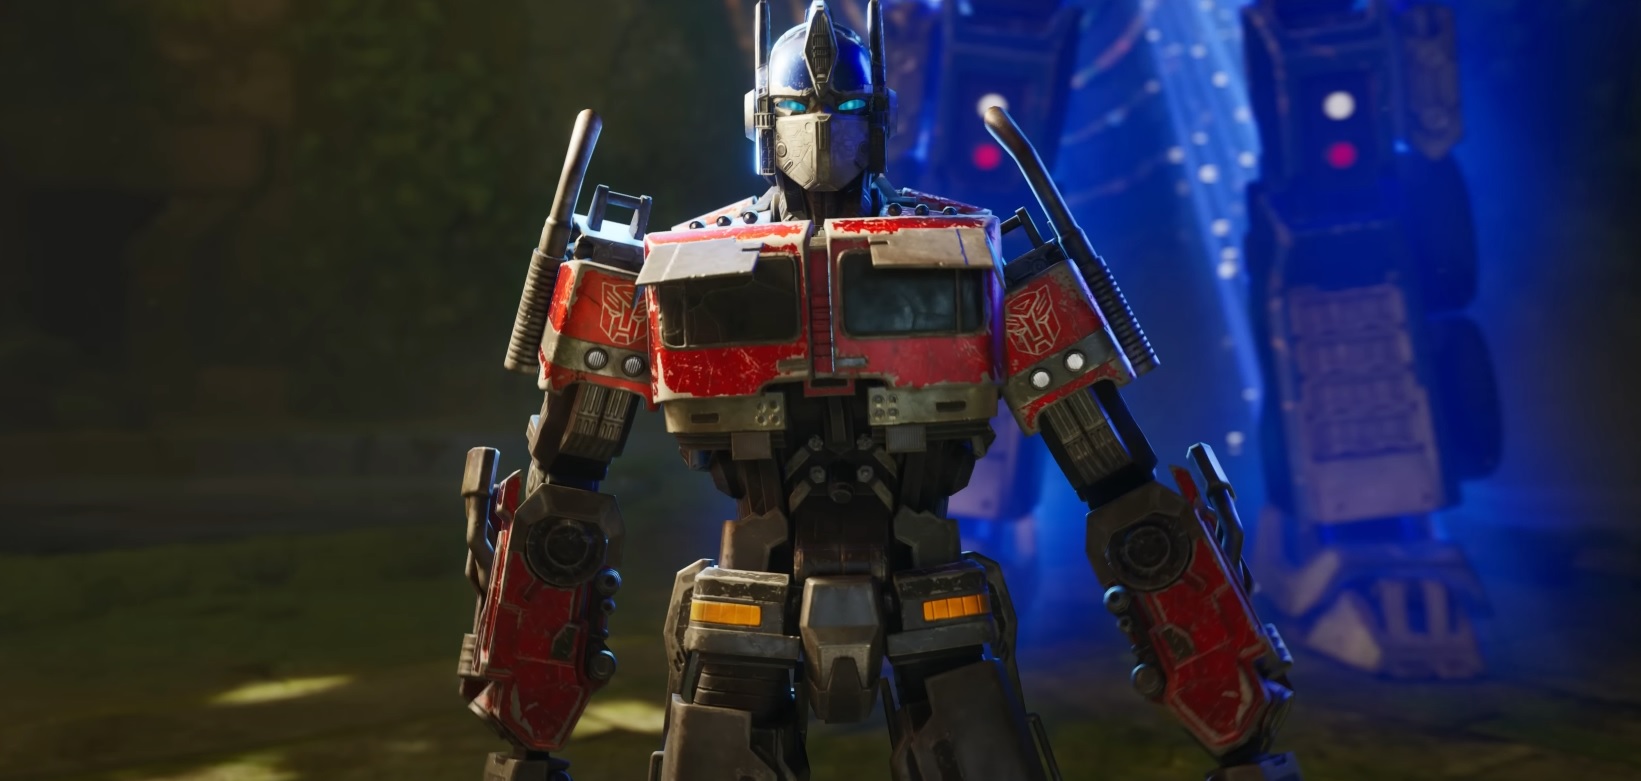  Fortnite - Transformers Pack - Xbox Series X : Video Games